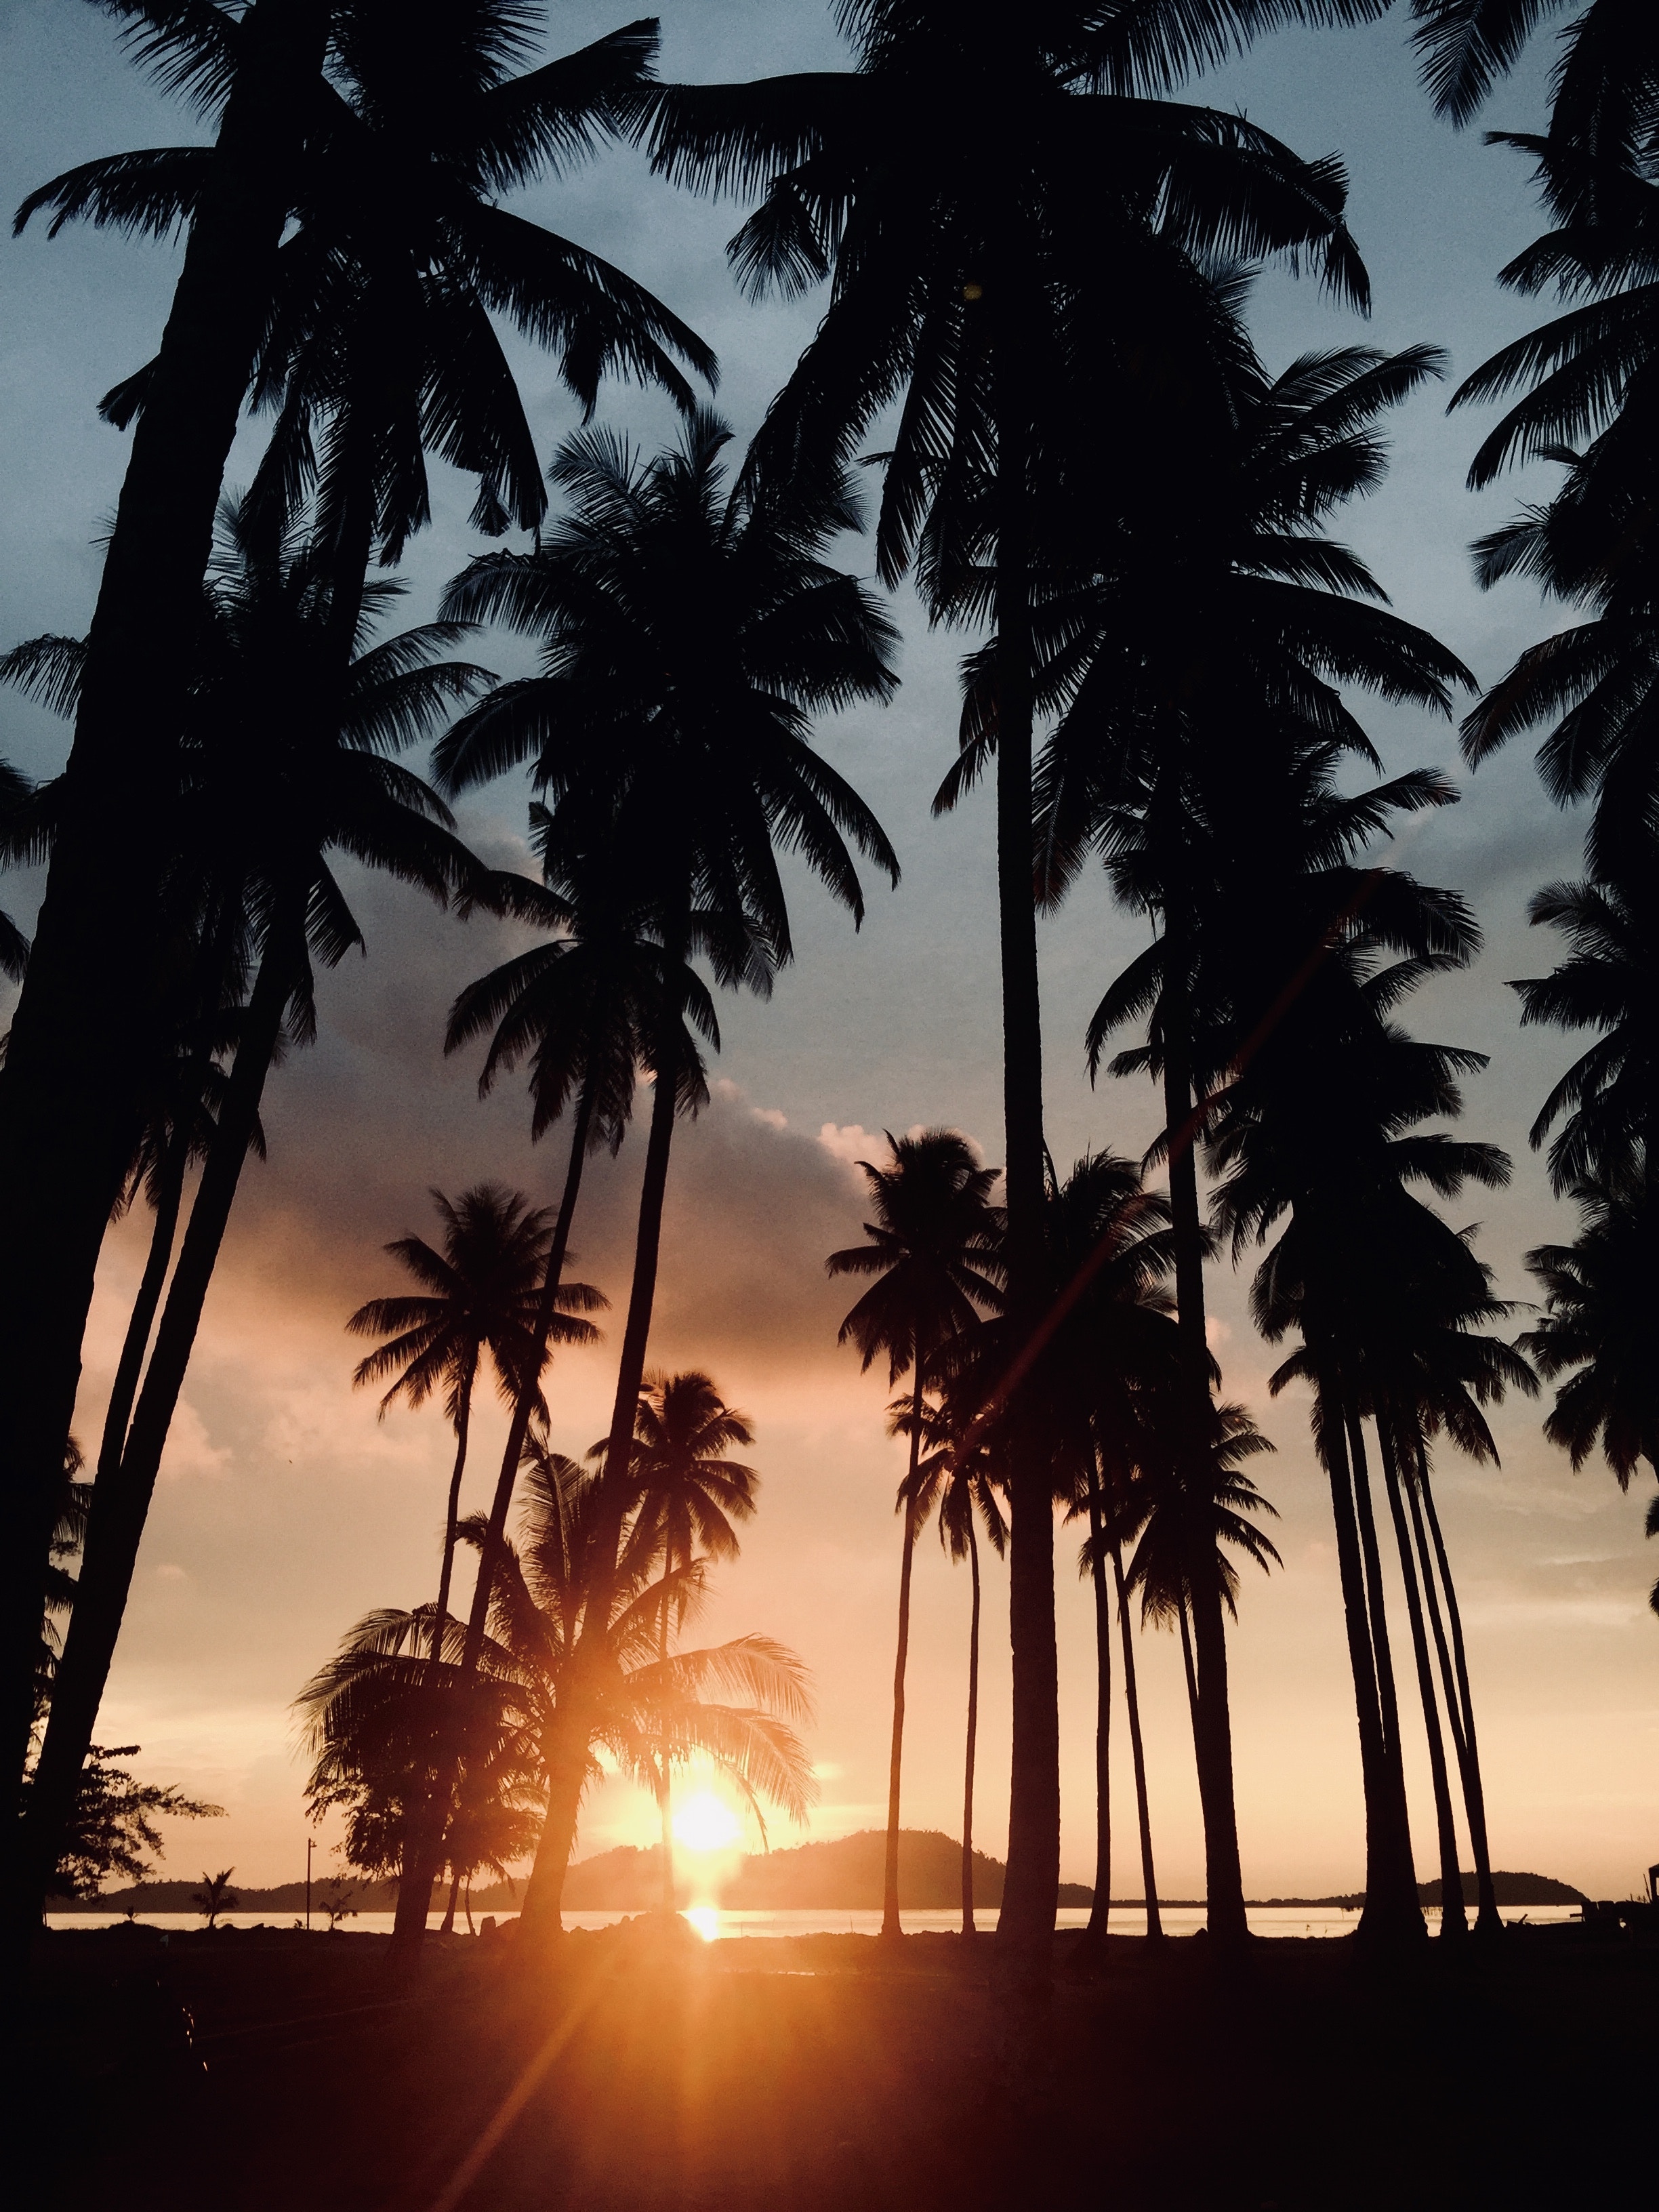 Download background nature, trees, sunset, palms, tropics, sunlight